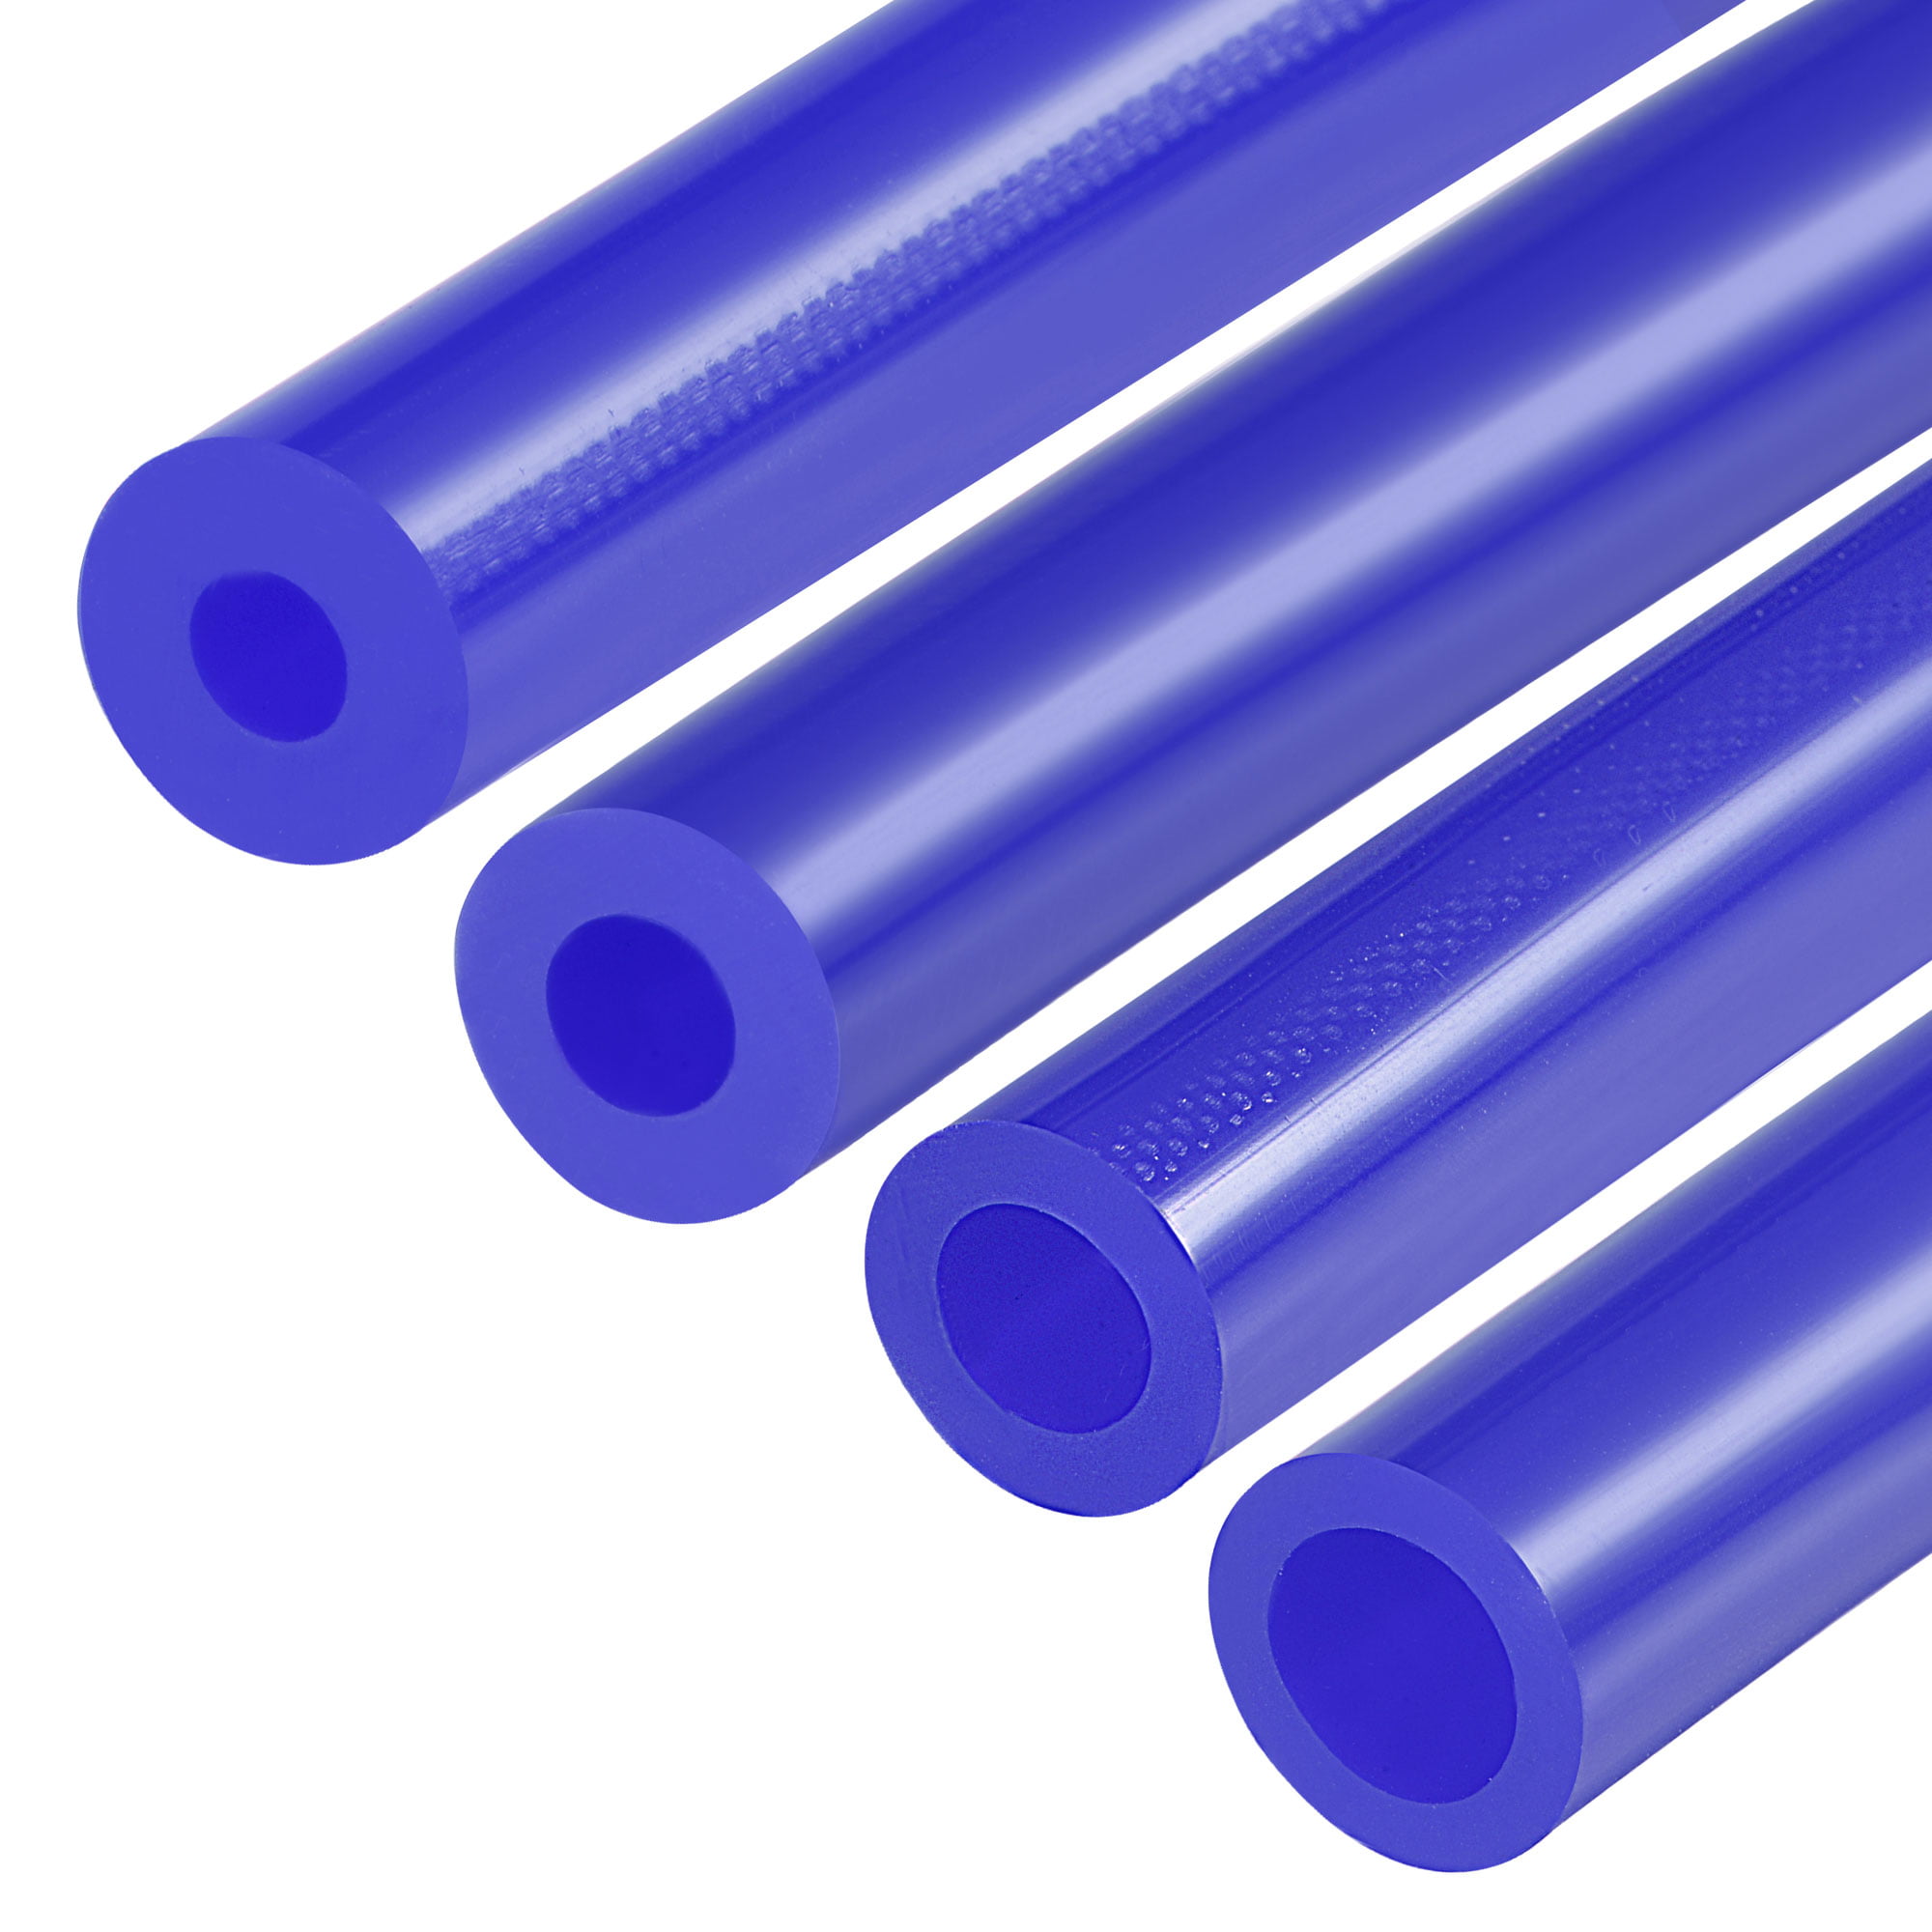 Blue/Sky blue 2~14mm ID Food Grade High Temp Silicone Flexible Tubing Hose/Pipe 